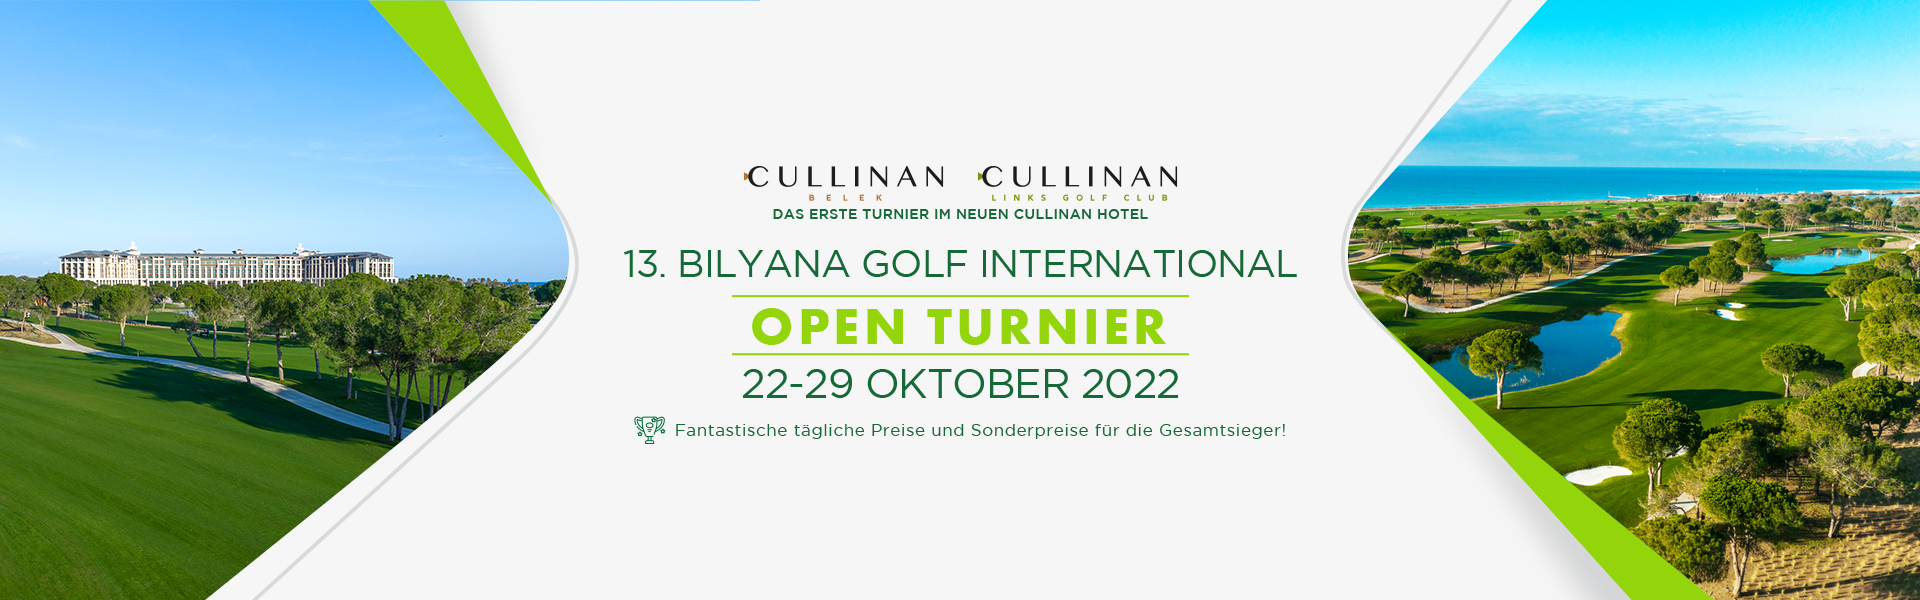 Bilyana Golf - 13. BILYANA GOLF INTERNATIONALES TURNIER